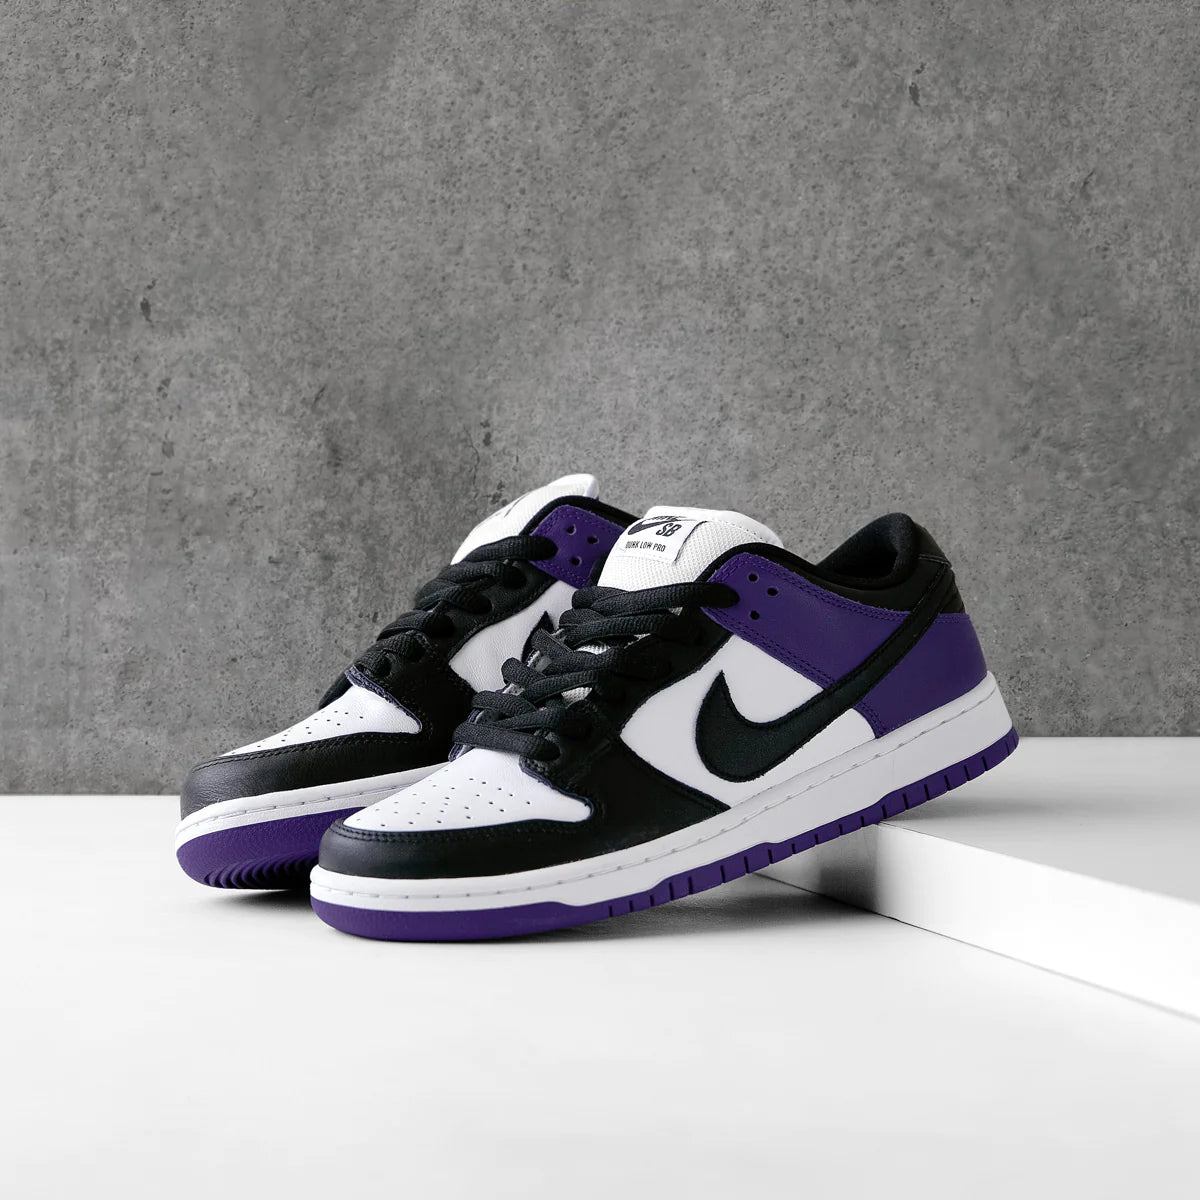 Nike SB Dunk Low Court Purple the purple king is back!